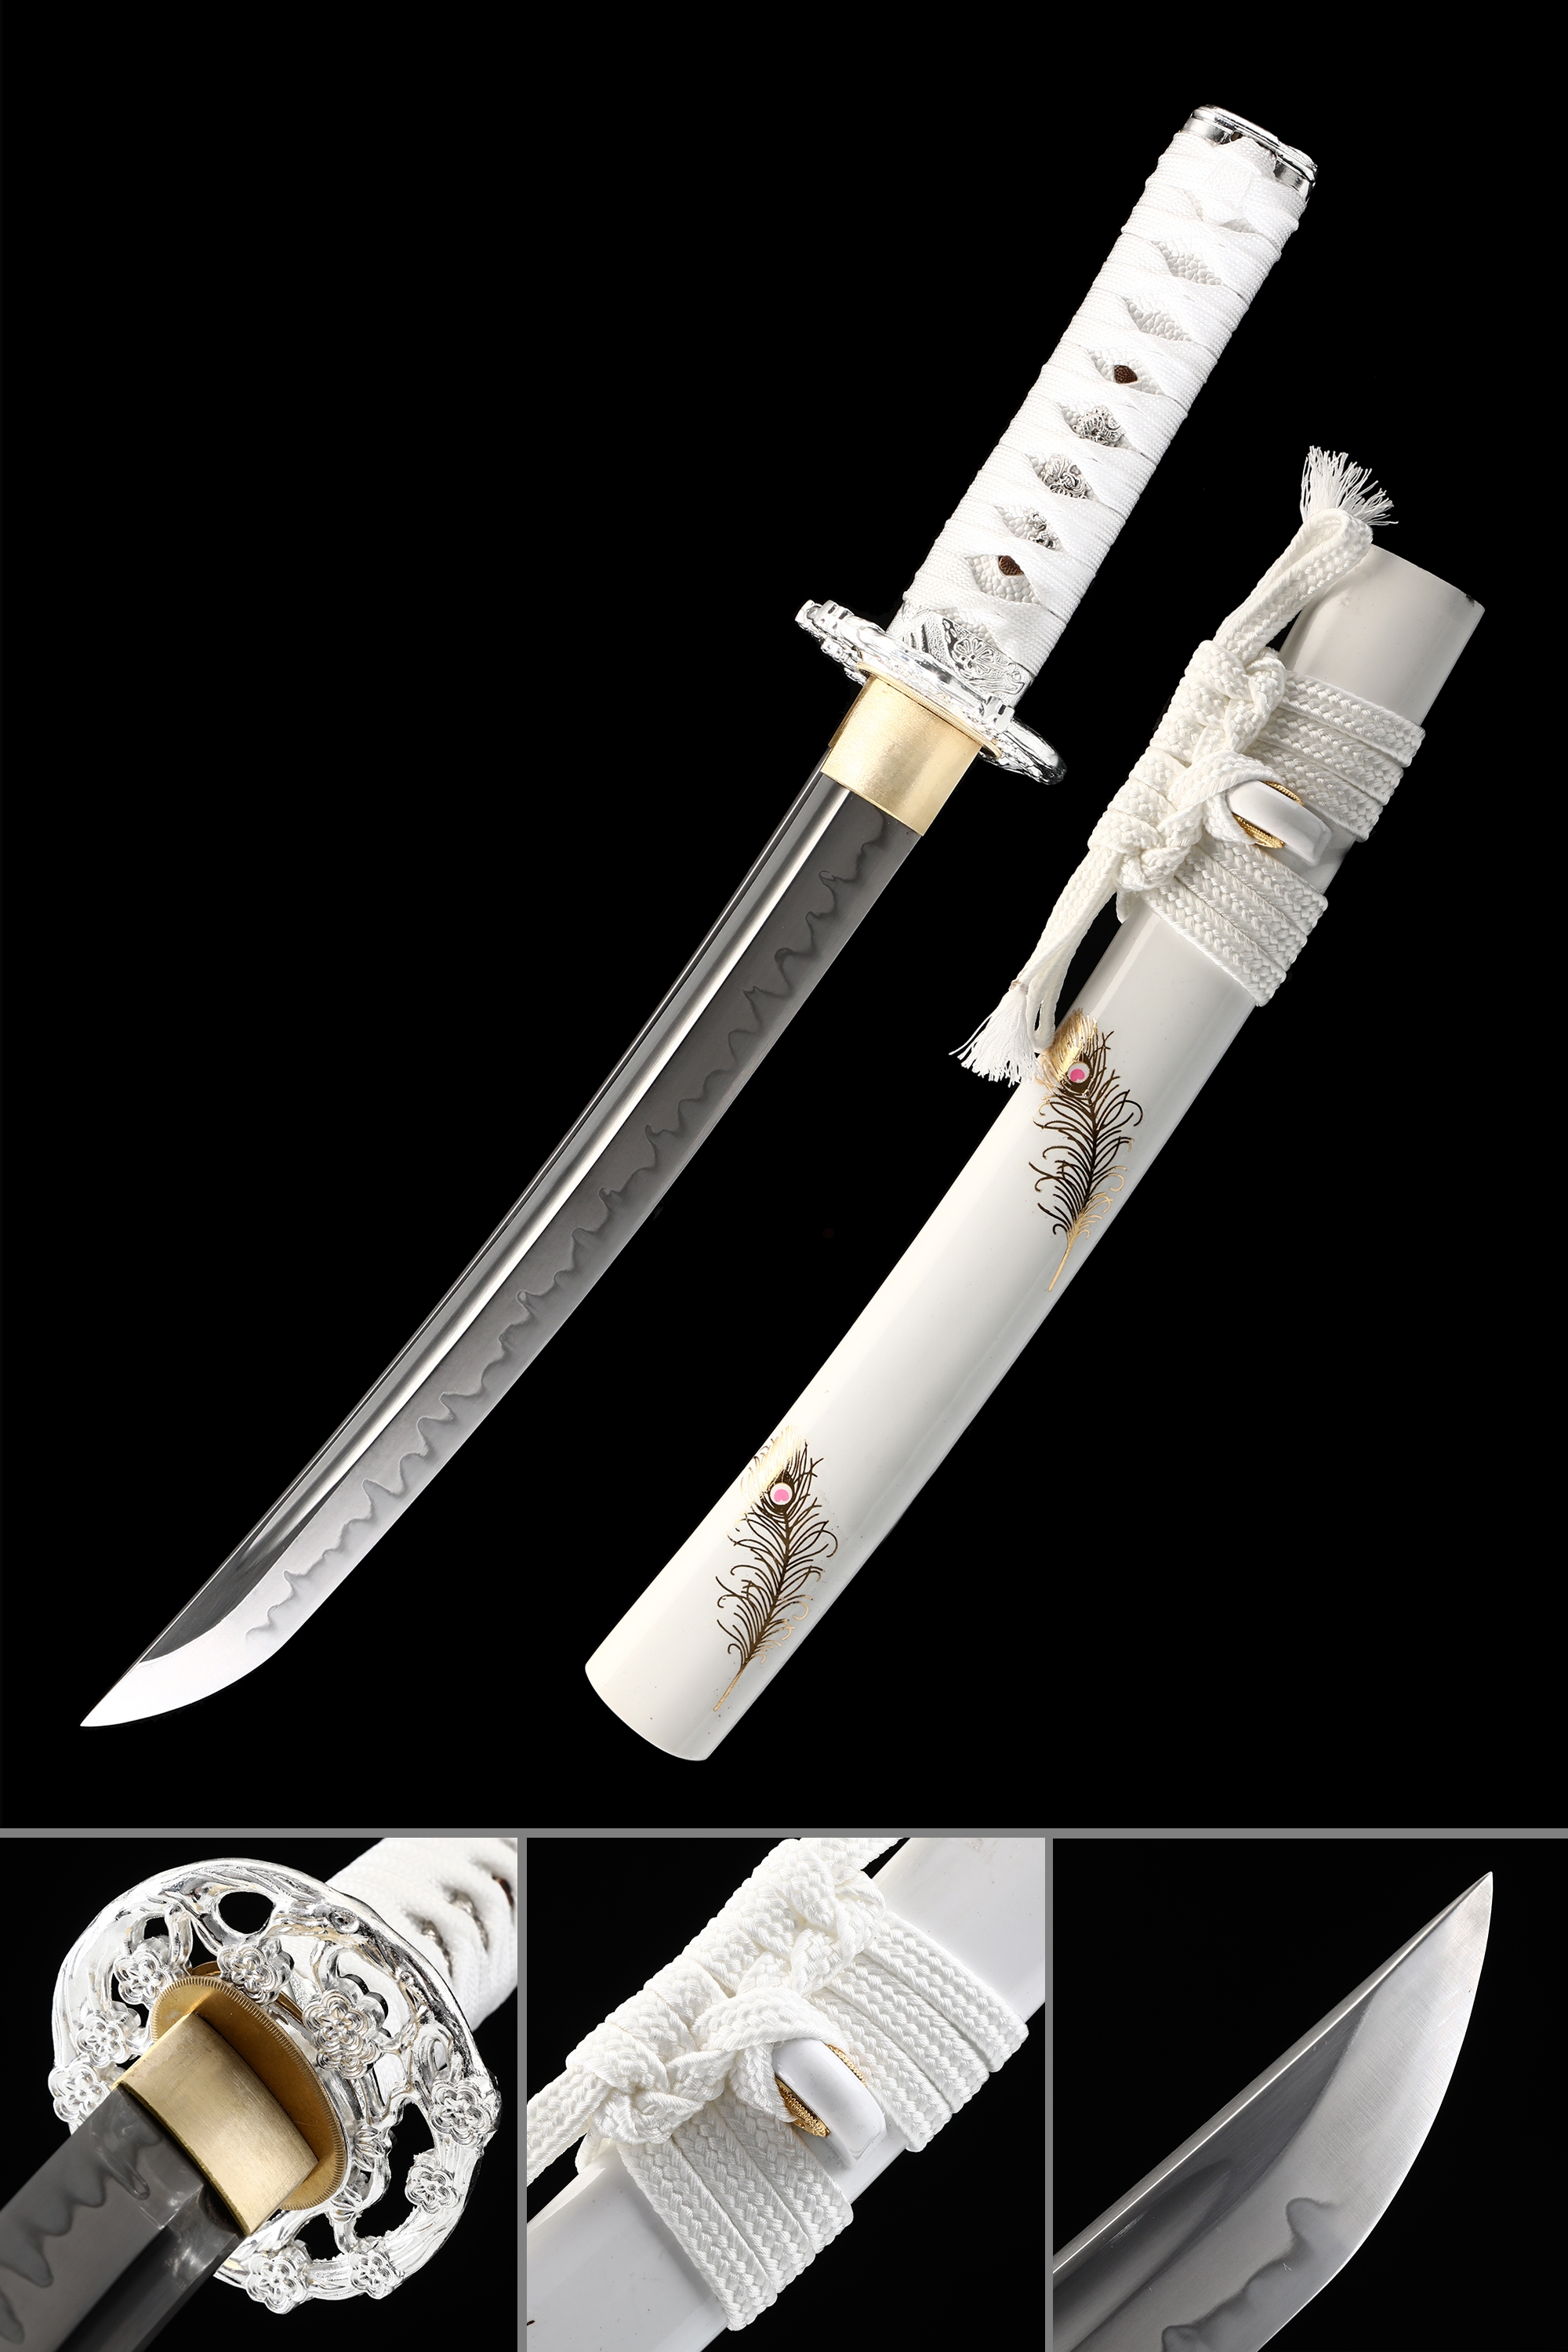 This beautiful handmade katana-style knife is an absolute